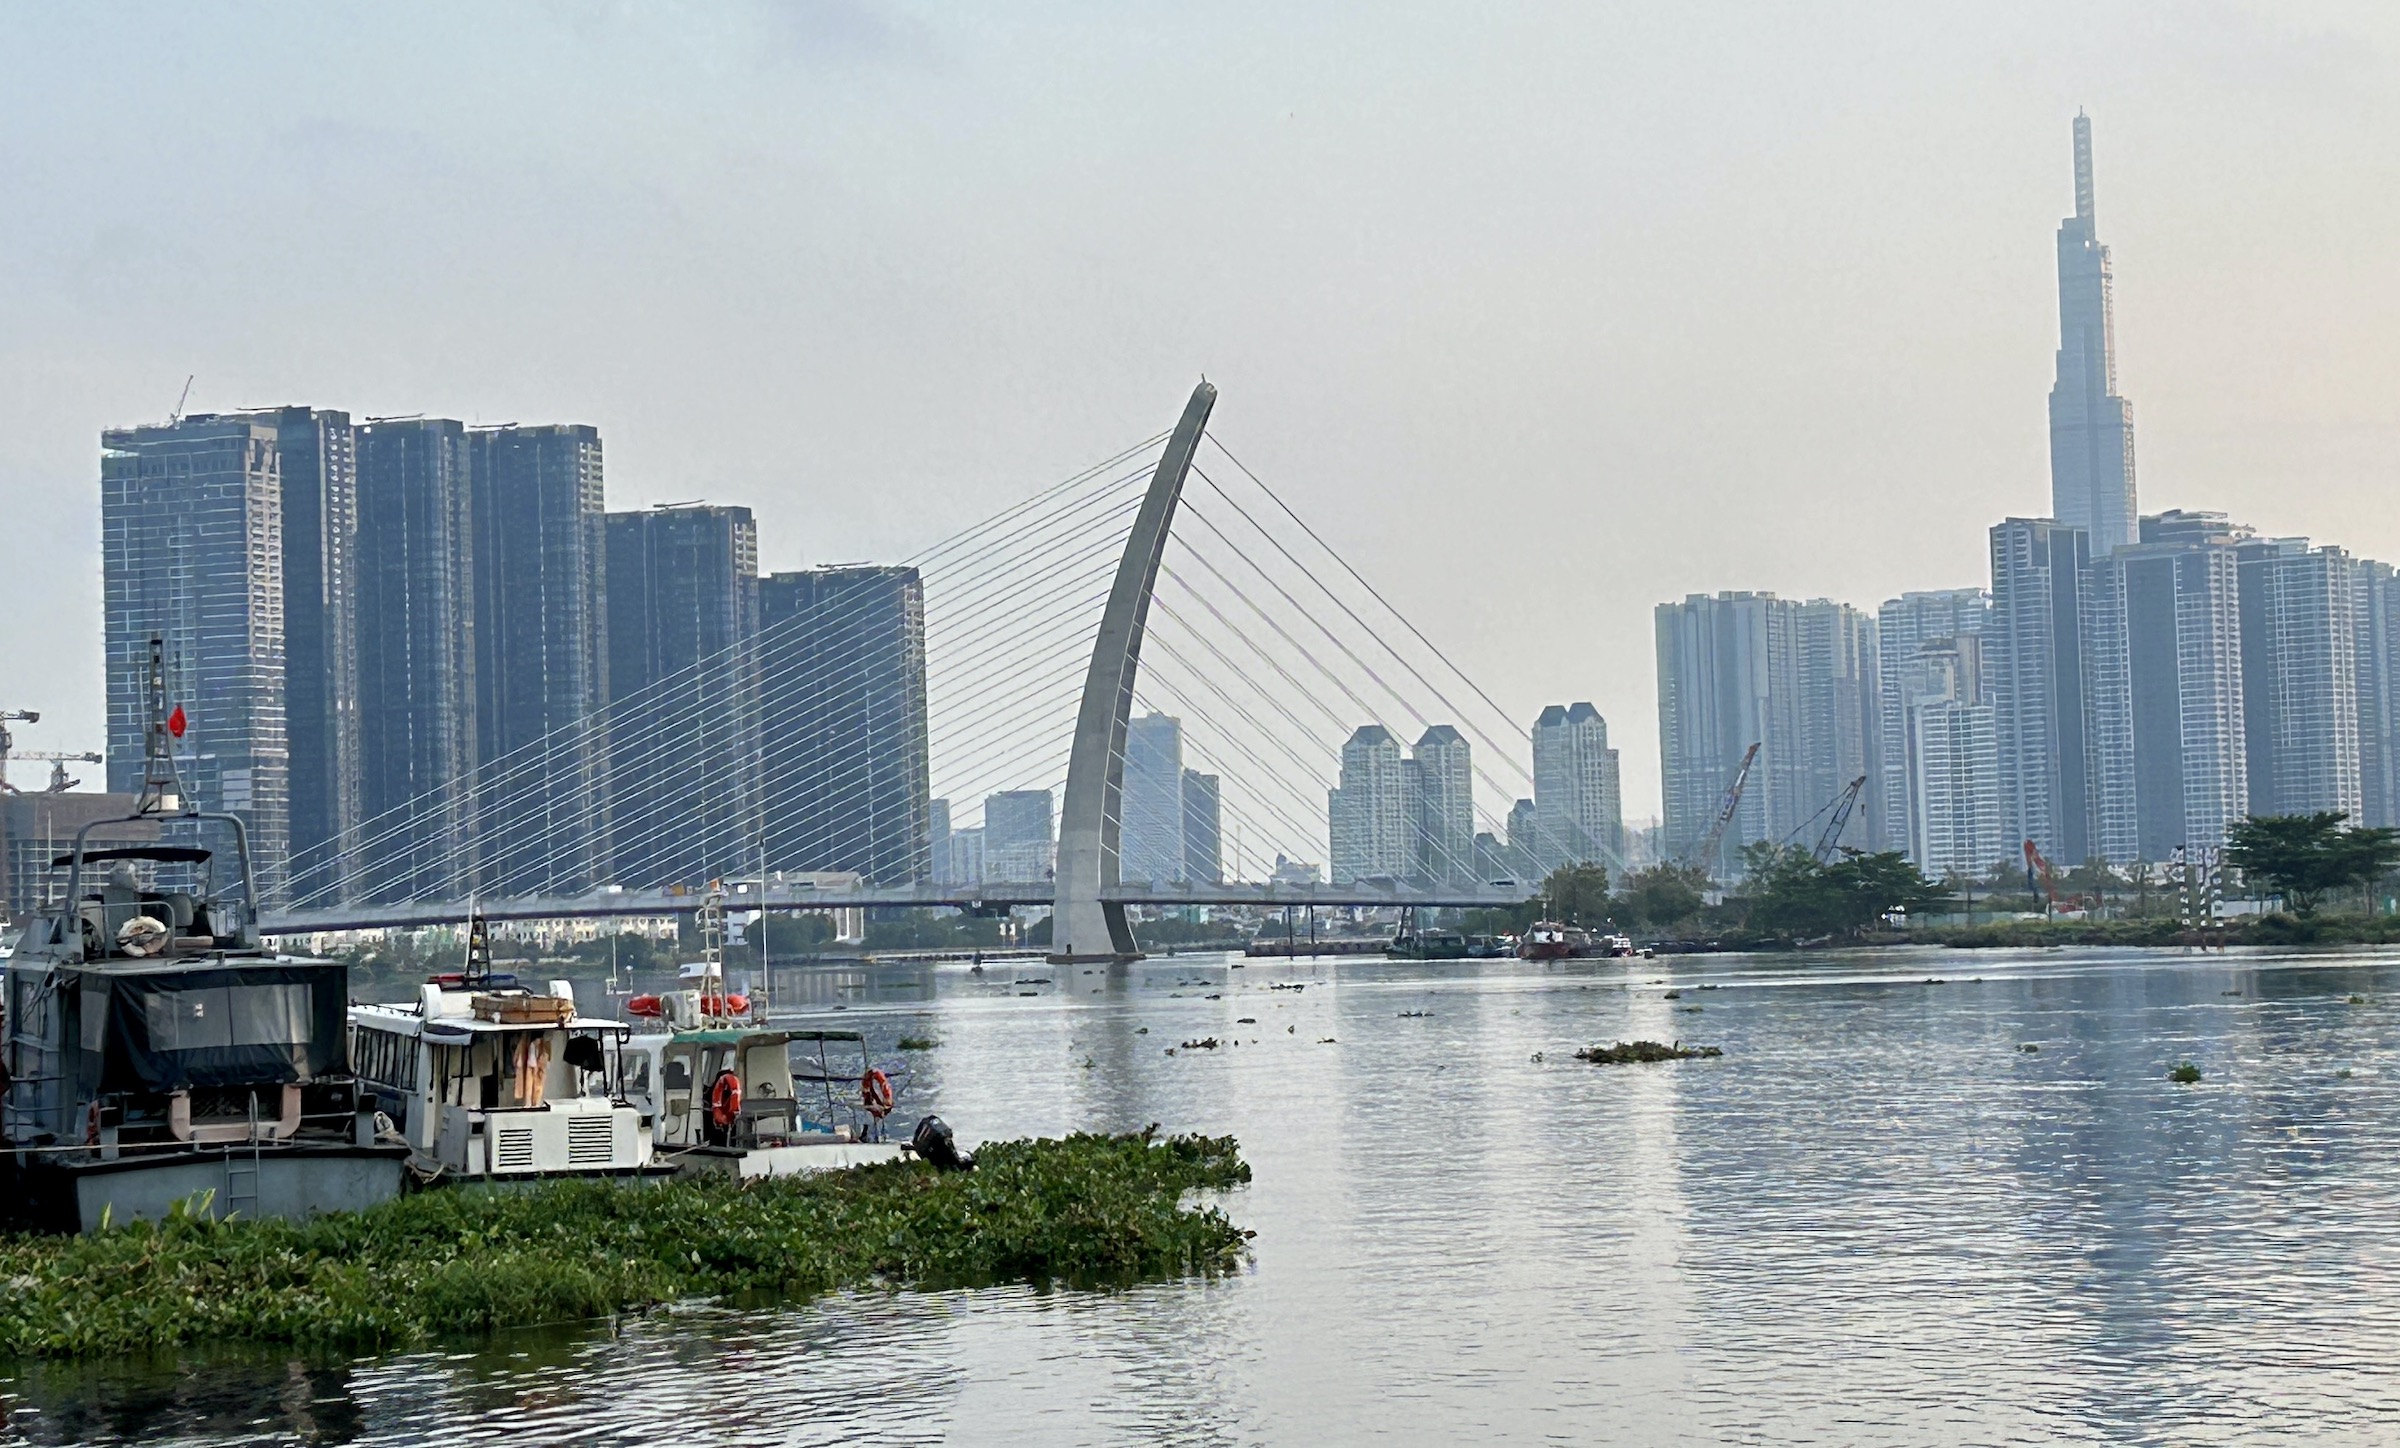 Morning on the Saigon River, Vietnam